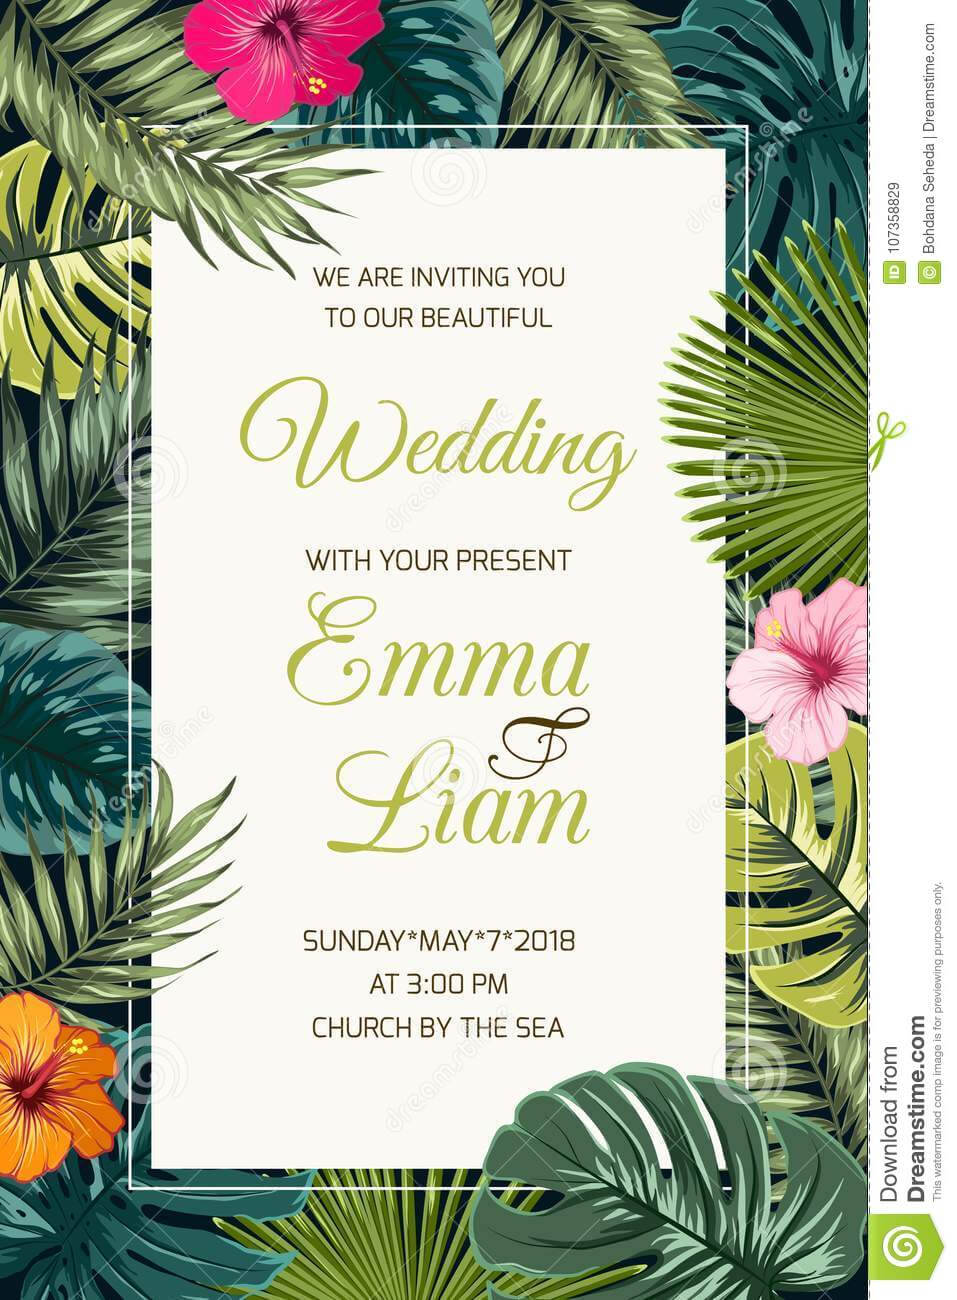 Wedding Event Invitation Card Template. Stock Vector With Event Invitation Card Template